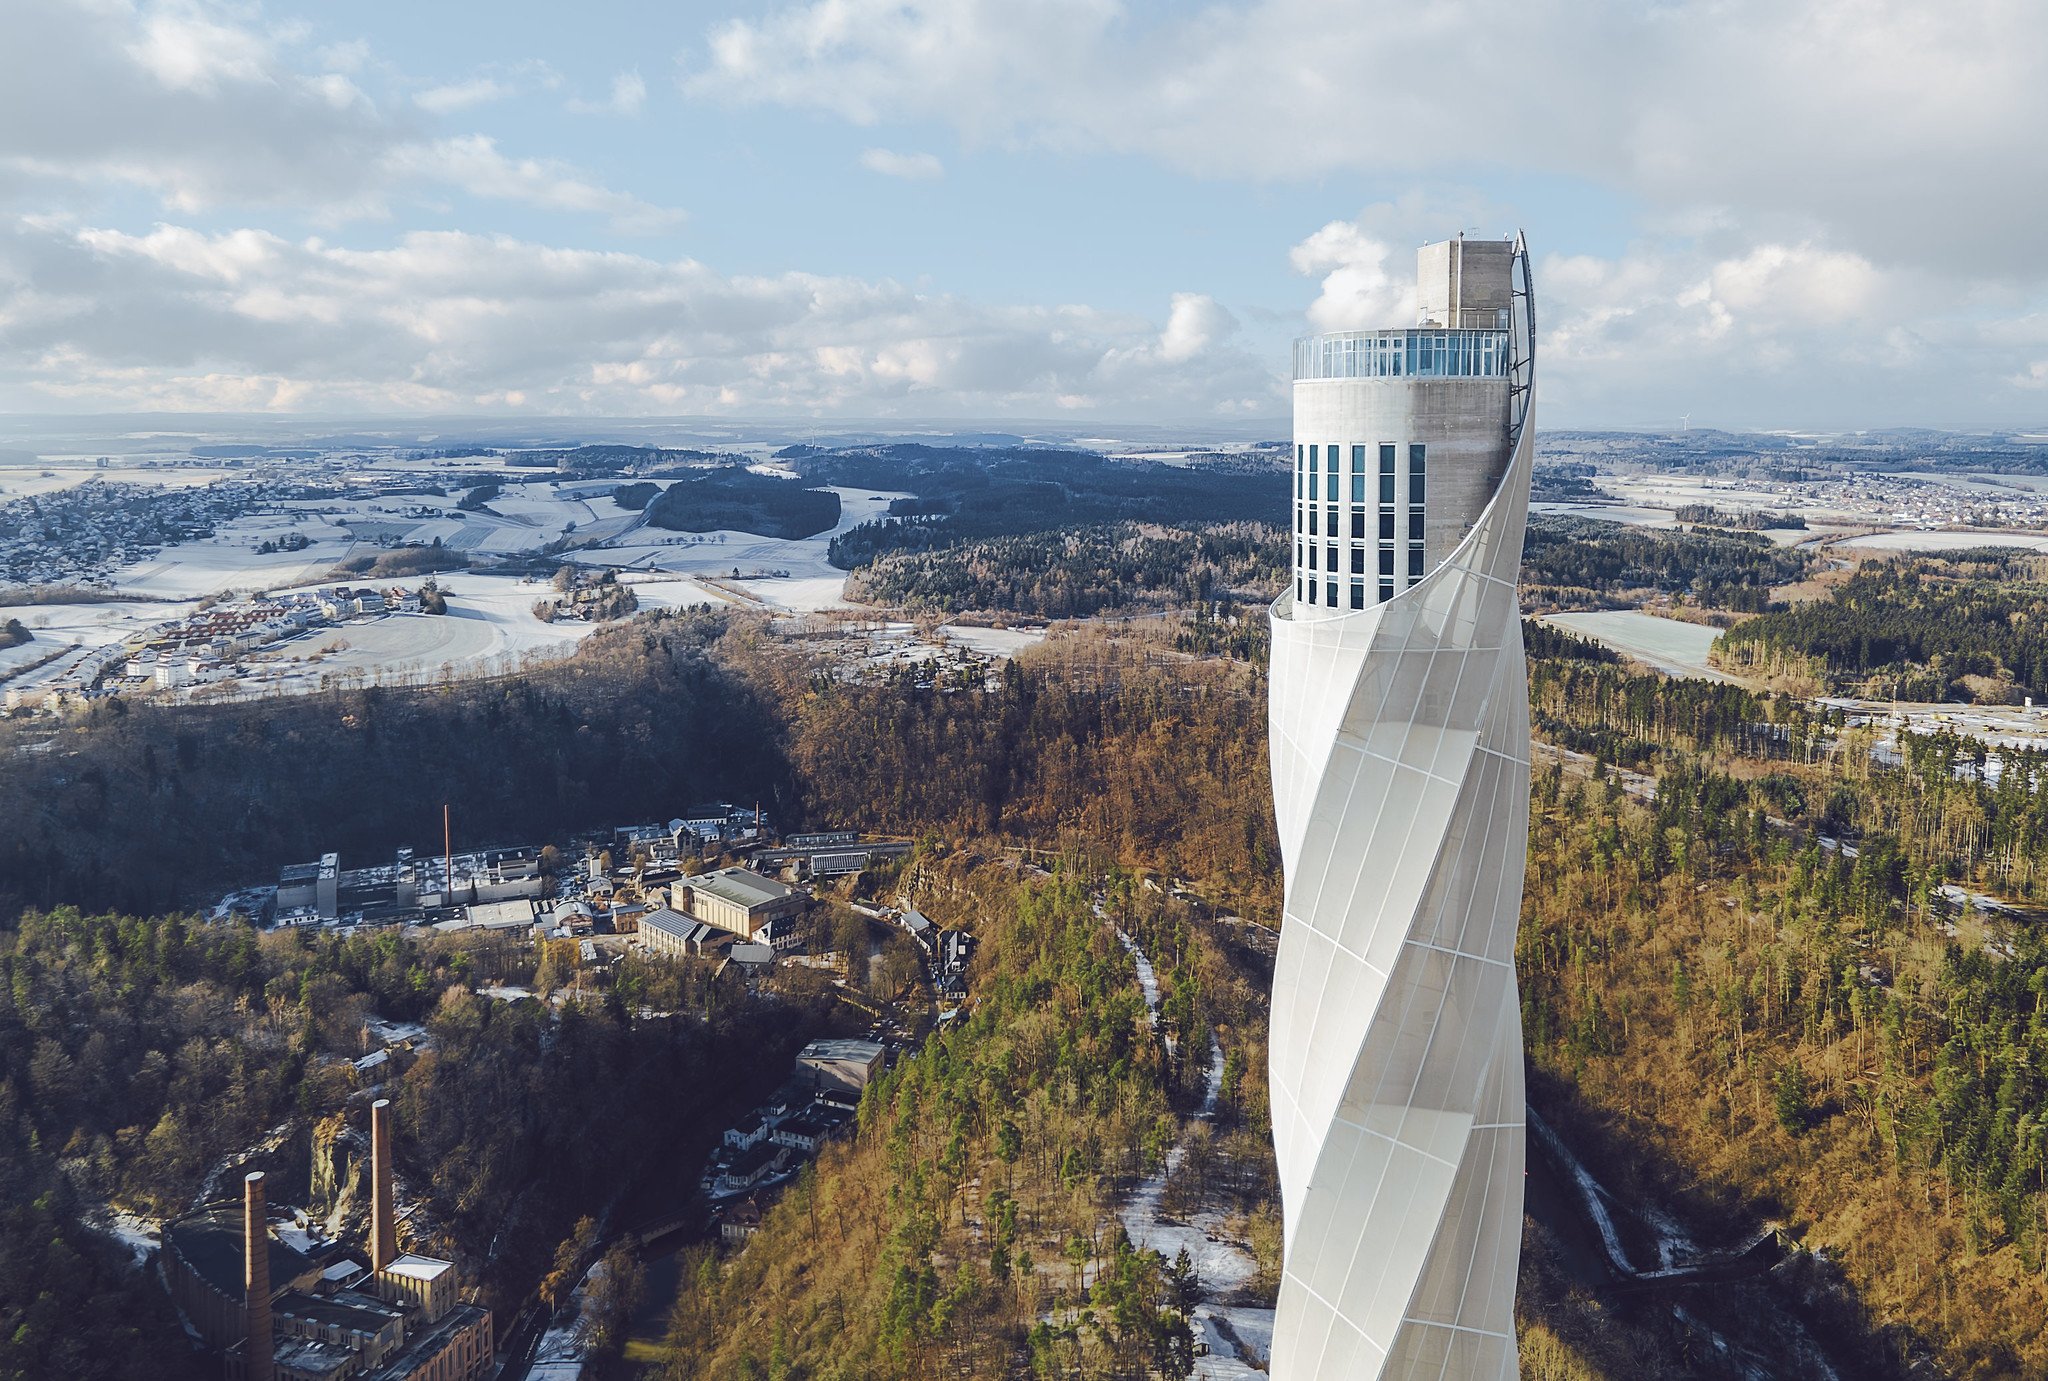 Thyssenkrupp Test Tower by Werner Sobek